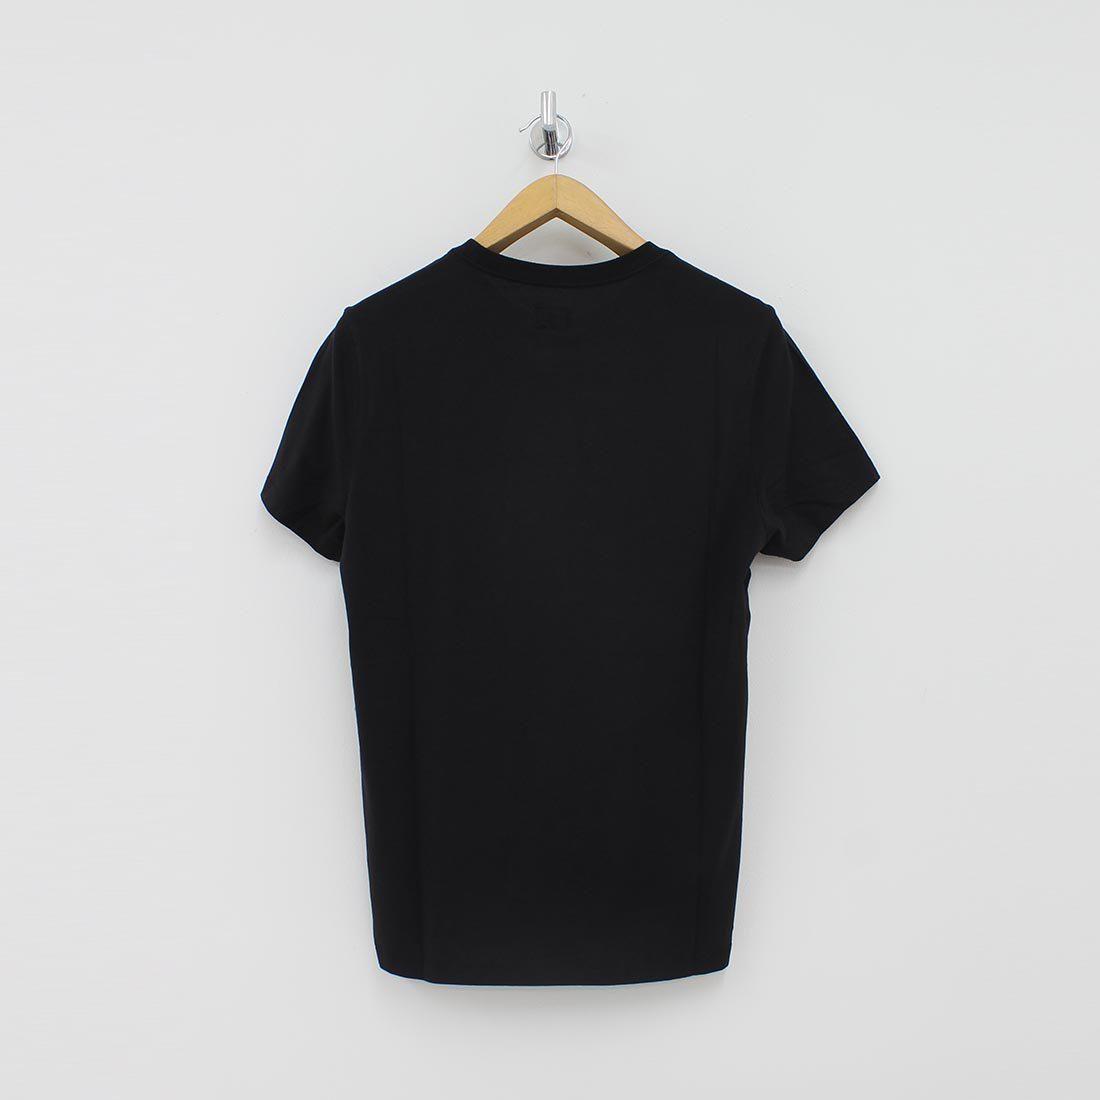 Black Square Company Logo - C P Company Square Logo T Shirt Black In Black For Men